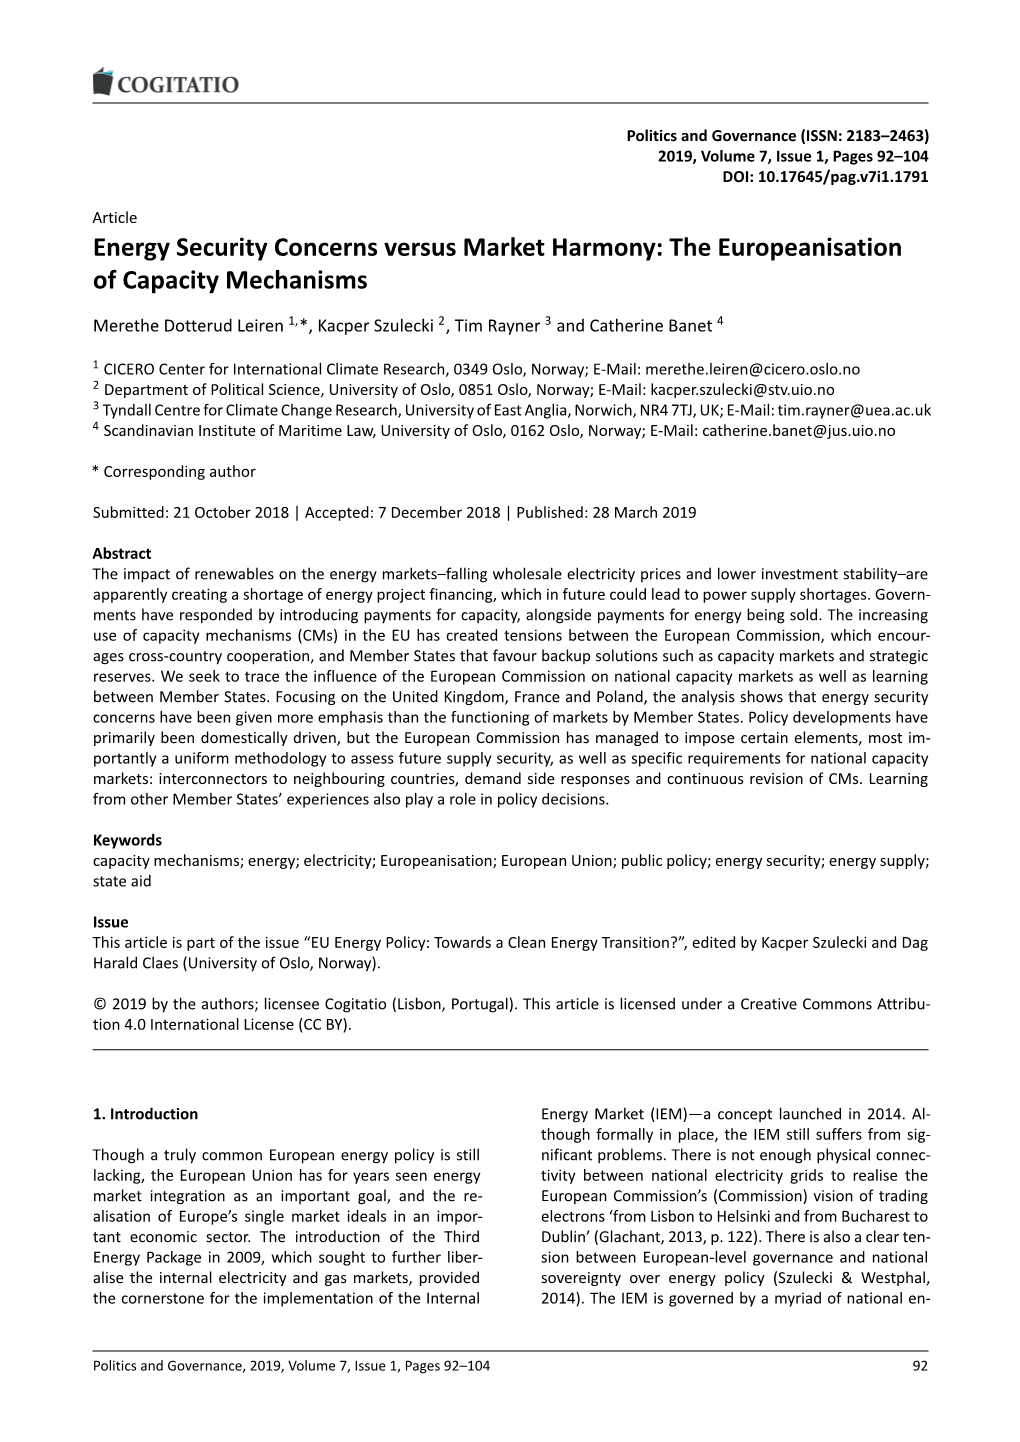 Energy Security Concerns Versus Market Harmony: the Europeanisation of Capacity Mechanisms